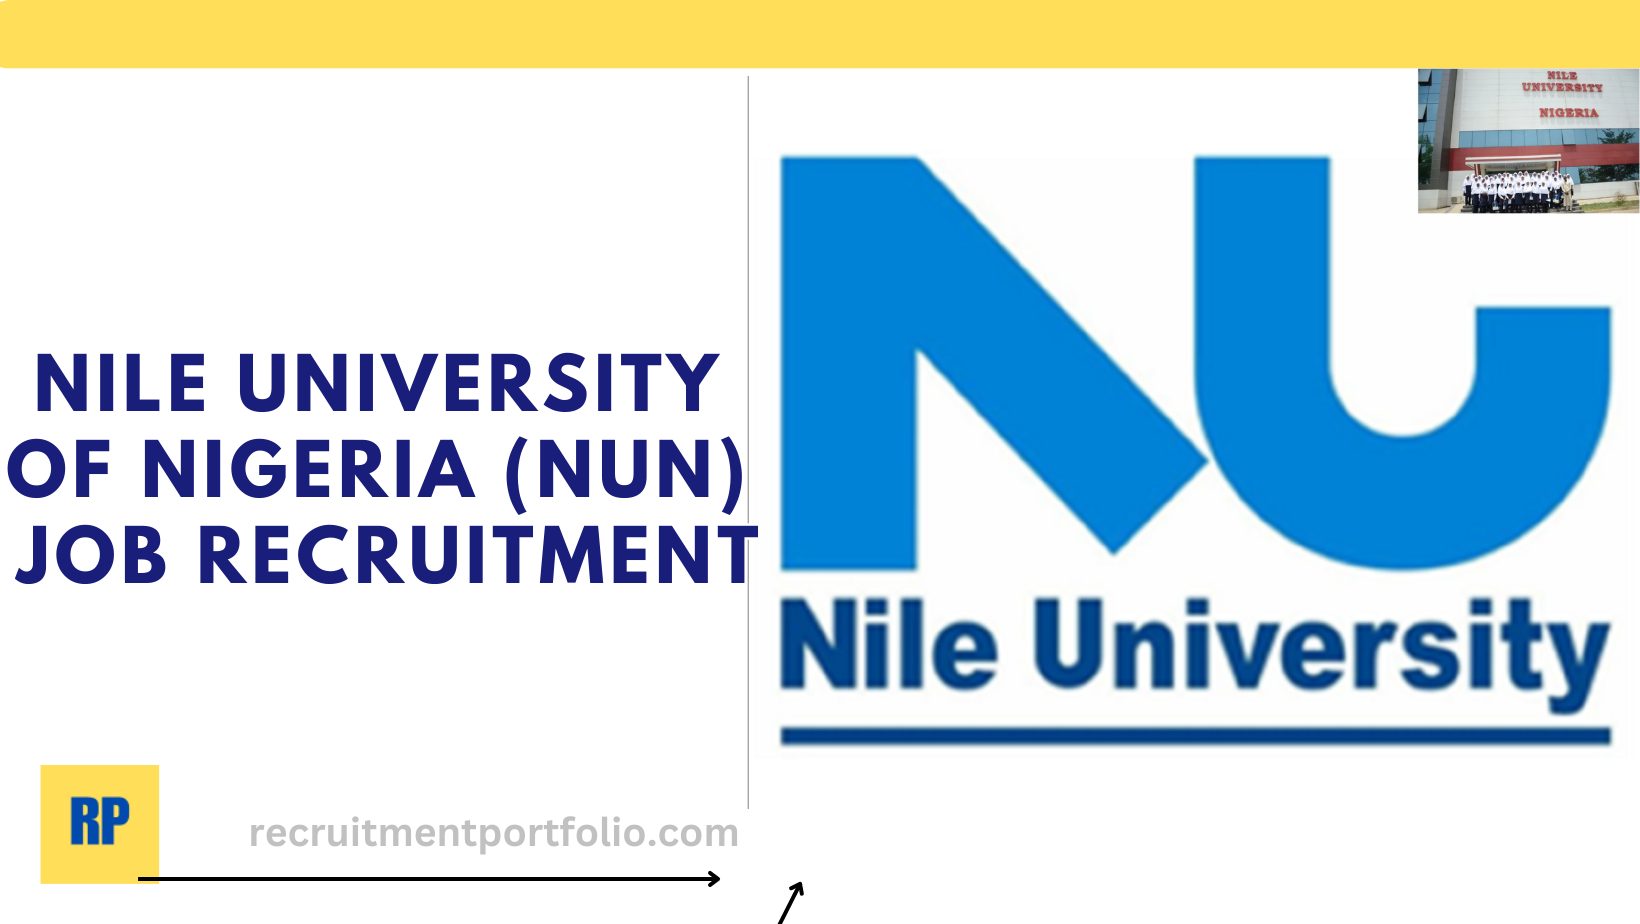 Nile University of Nigeria (NUN) Job Recruitment